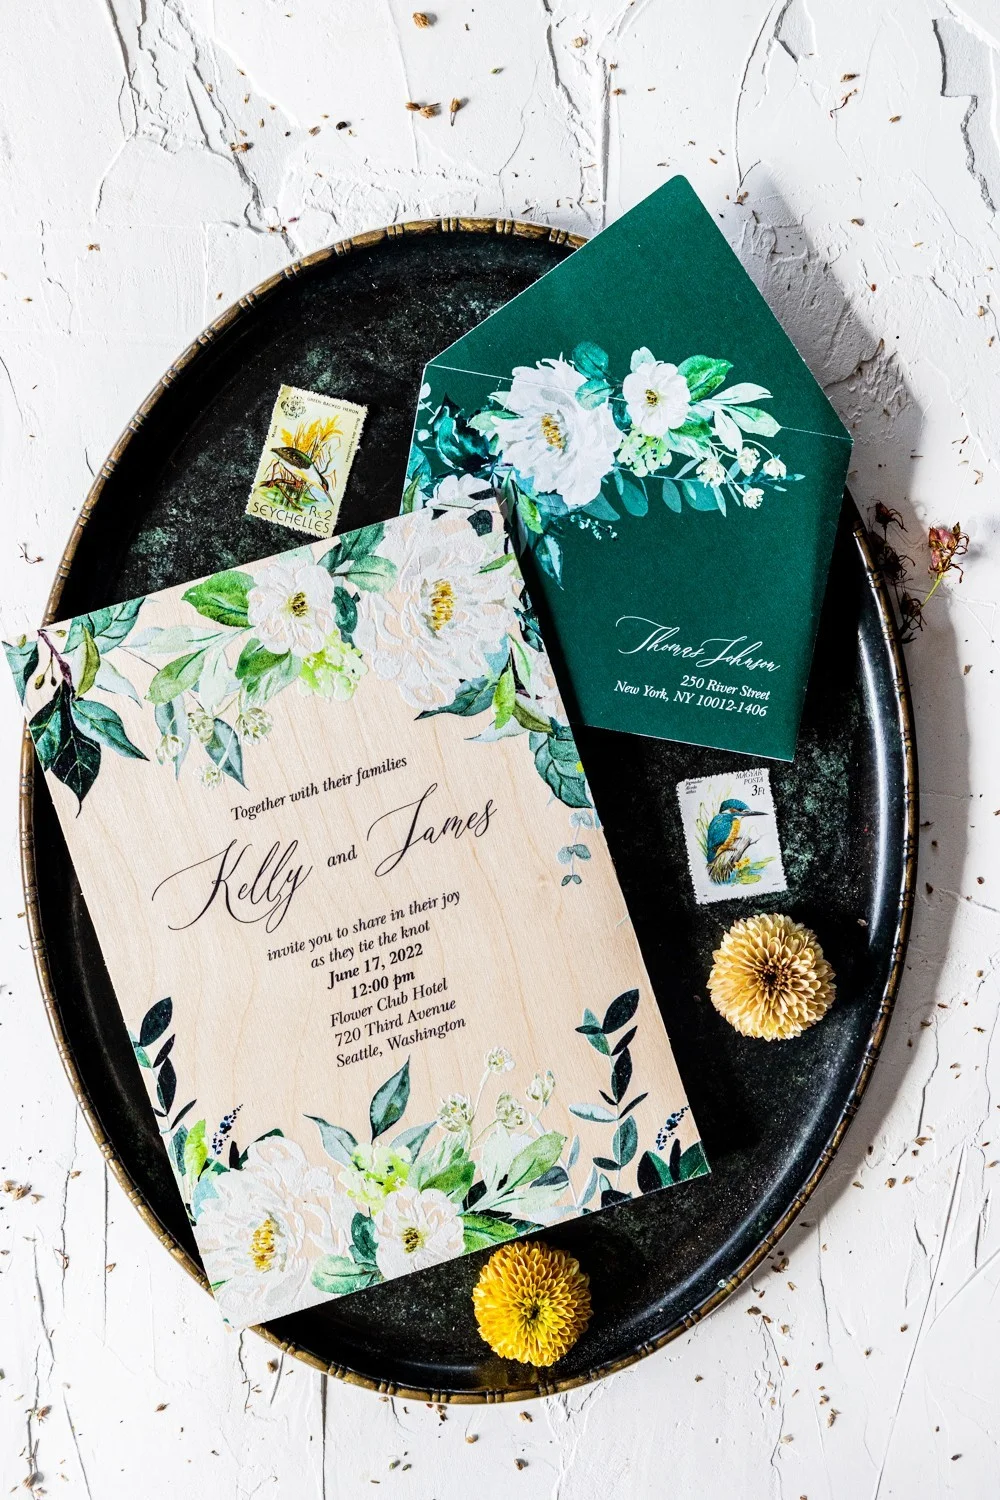 Rustic Wooden Wedding Invitation: Greenery, White Flowers, Forest Theme, Handmade Envelope - GL45